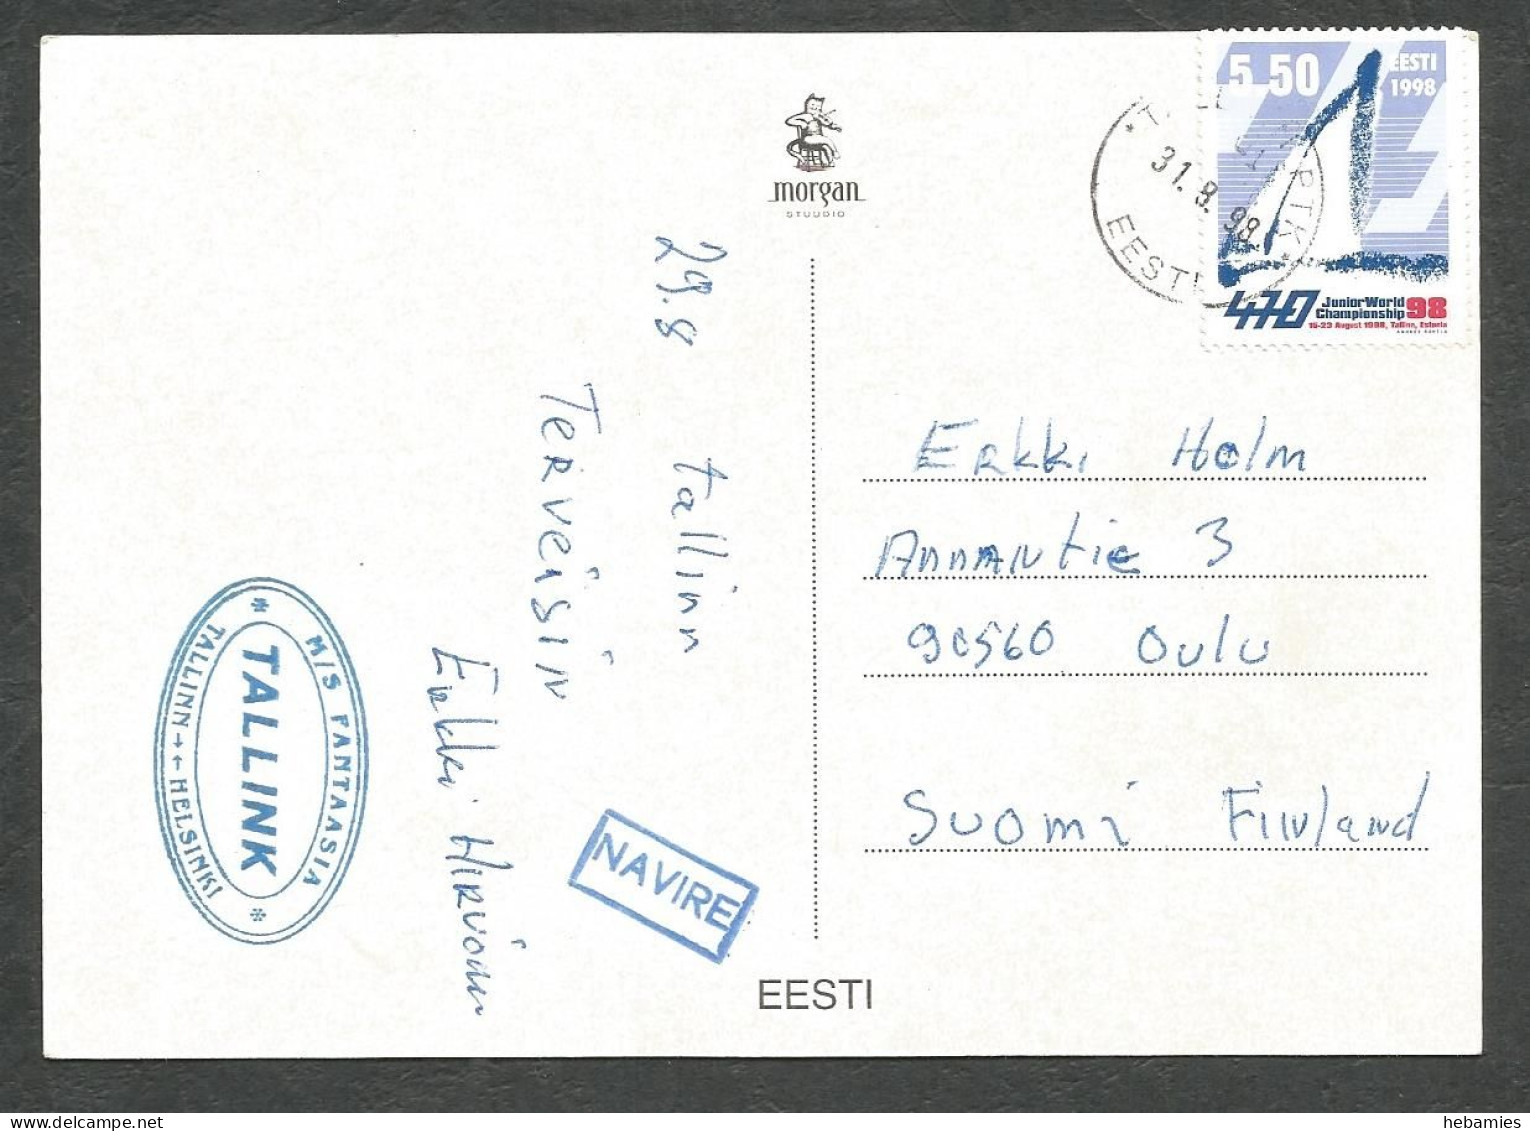 ESTONIAN CASTLES - Special Ship Stamped M/S FANTASIA / TALLINK - ESTONIA - EESTI - - Châteaux